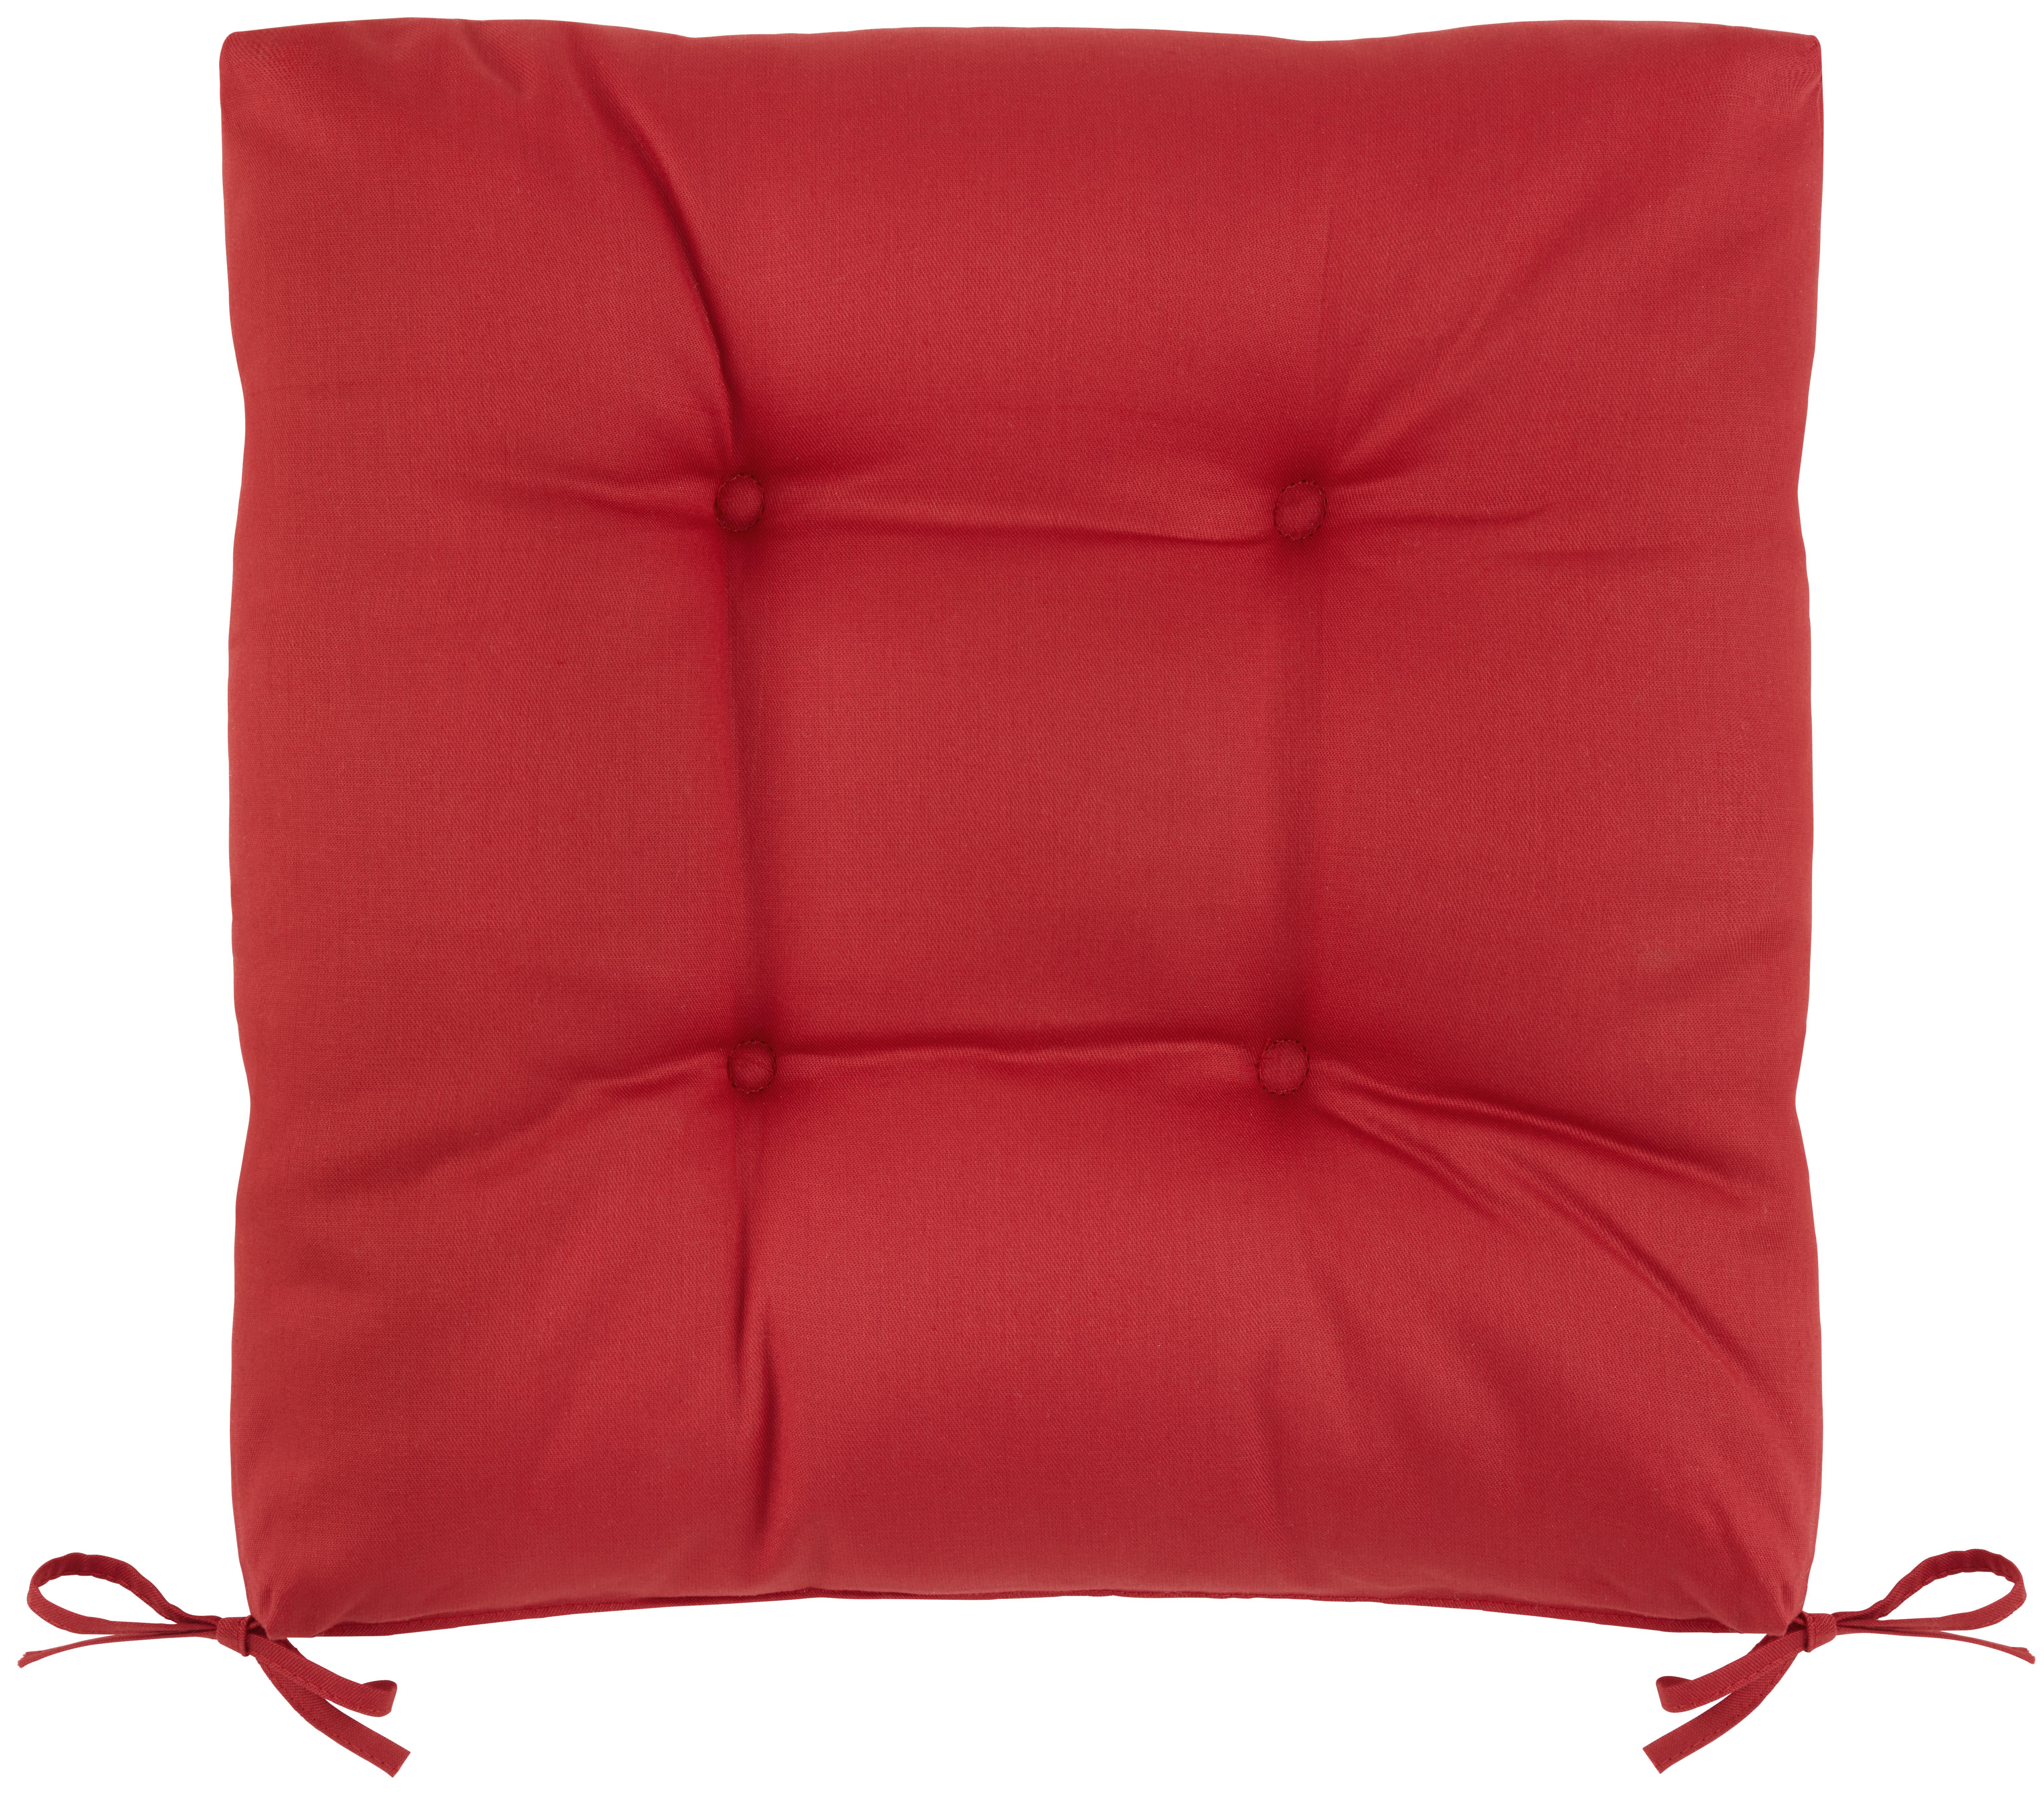 Sedežna Blazina Elli - rdeča, Konvencionalno (40/40/7cm) - Modern Living